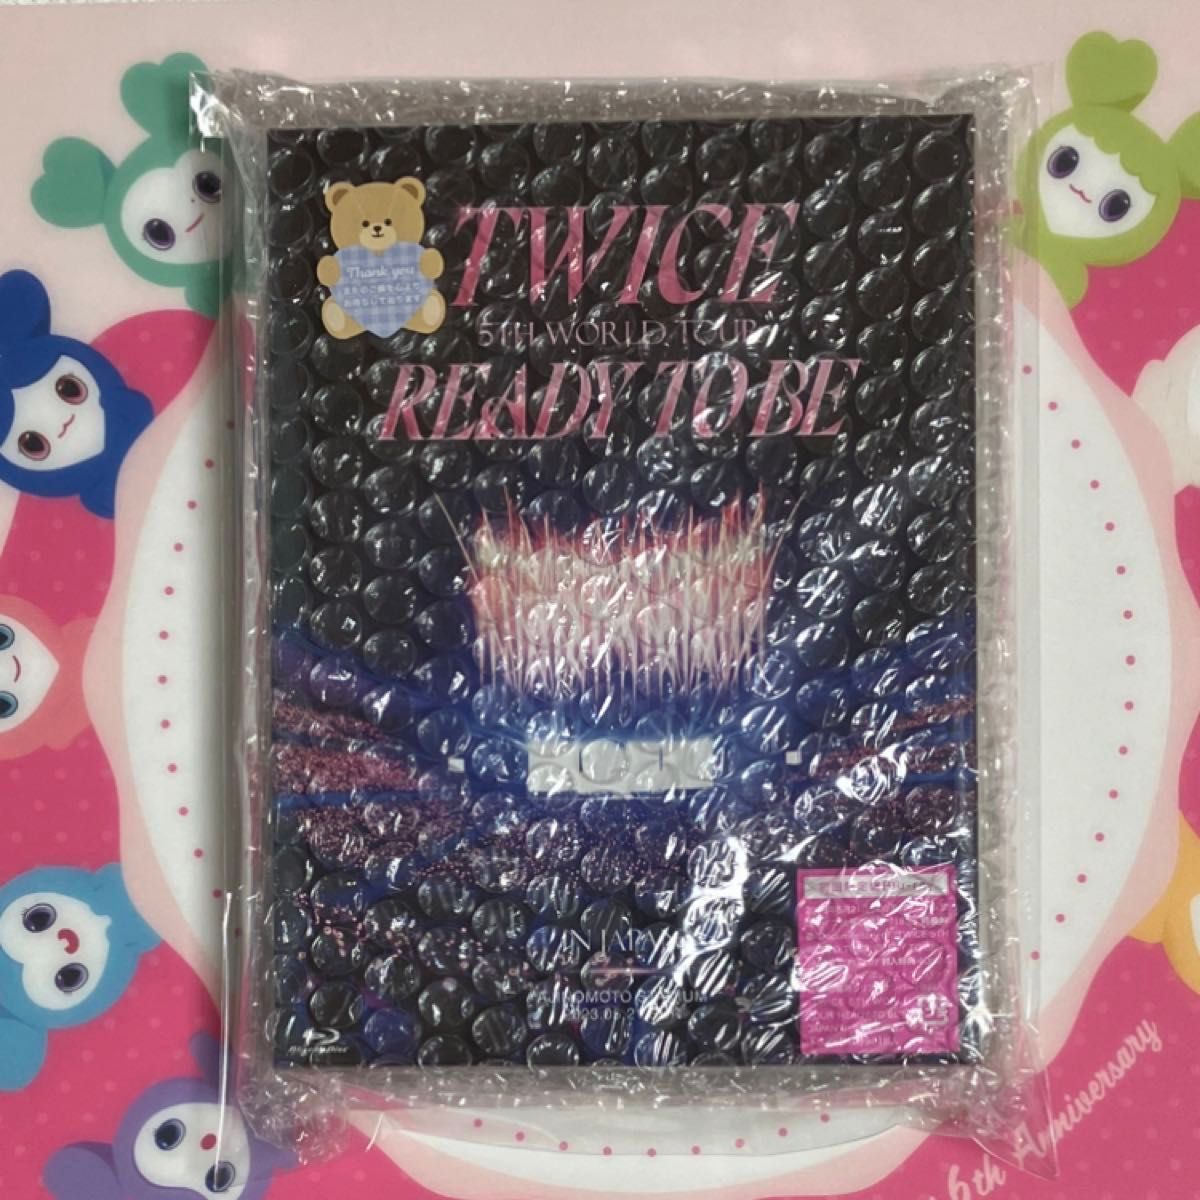 TWICE 5TH WORLD TOUR READY TO BE 初回限定盤 未再生 Blu-ray 